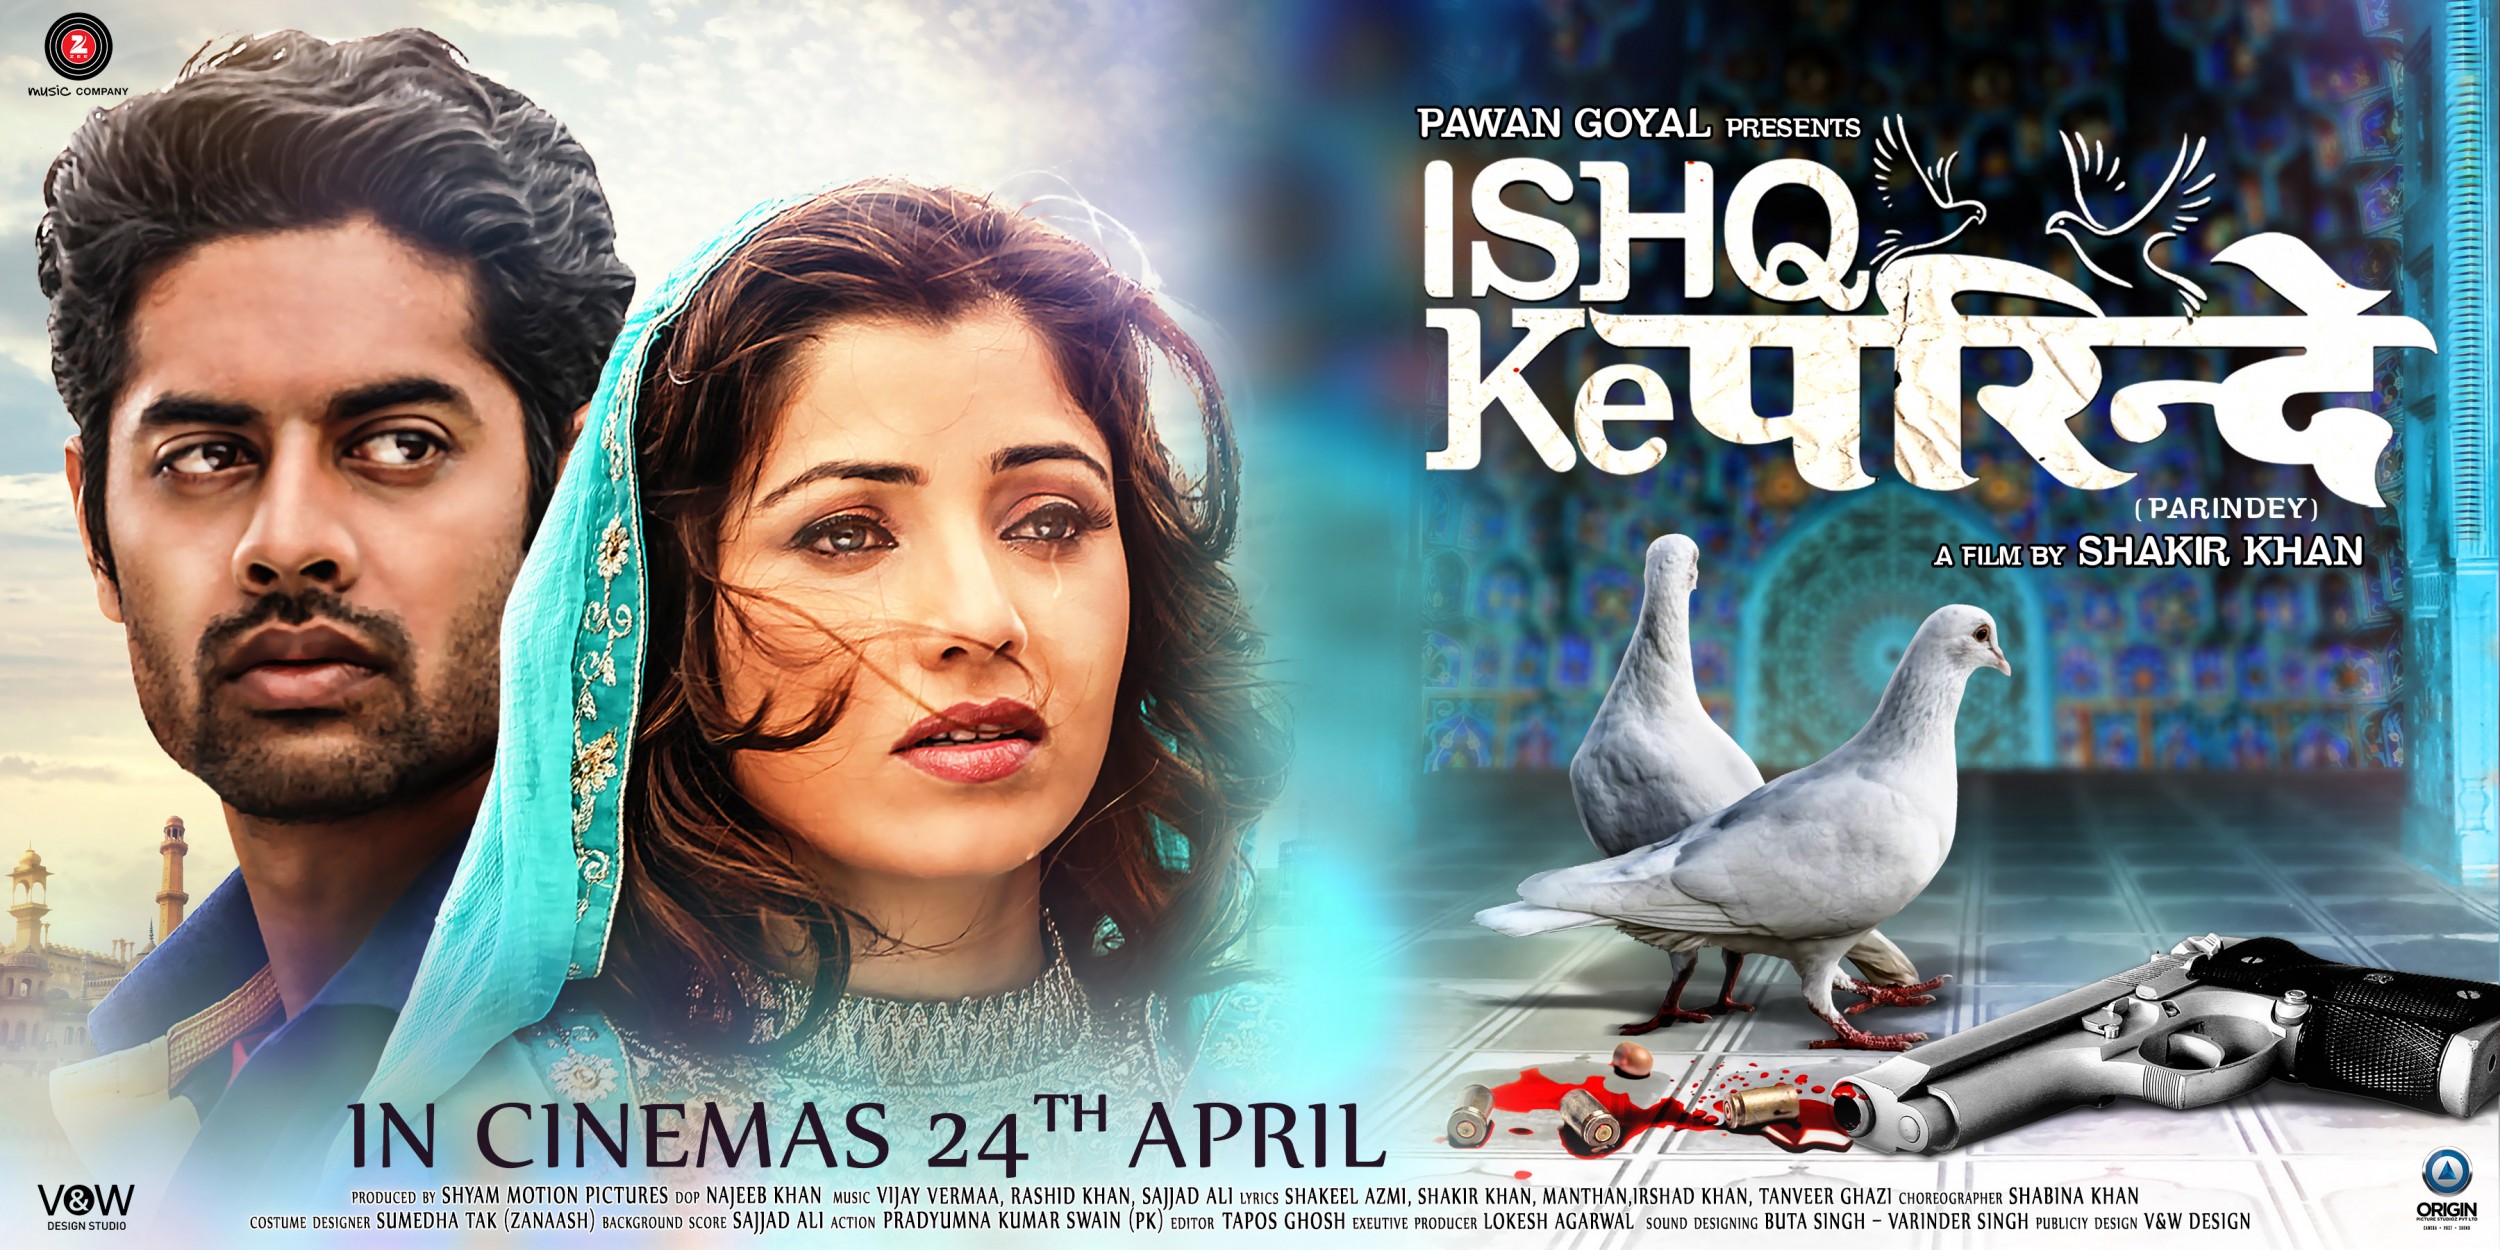 Mega Sized Movie Poster Image for Ishq Ke Parindey (#3 of 4)